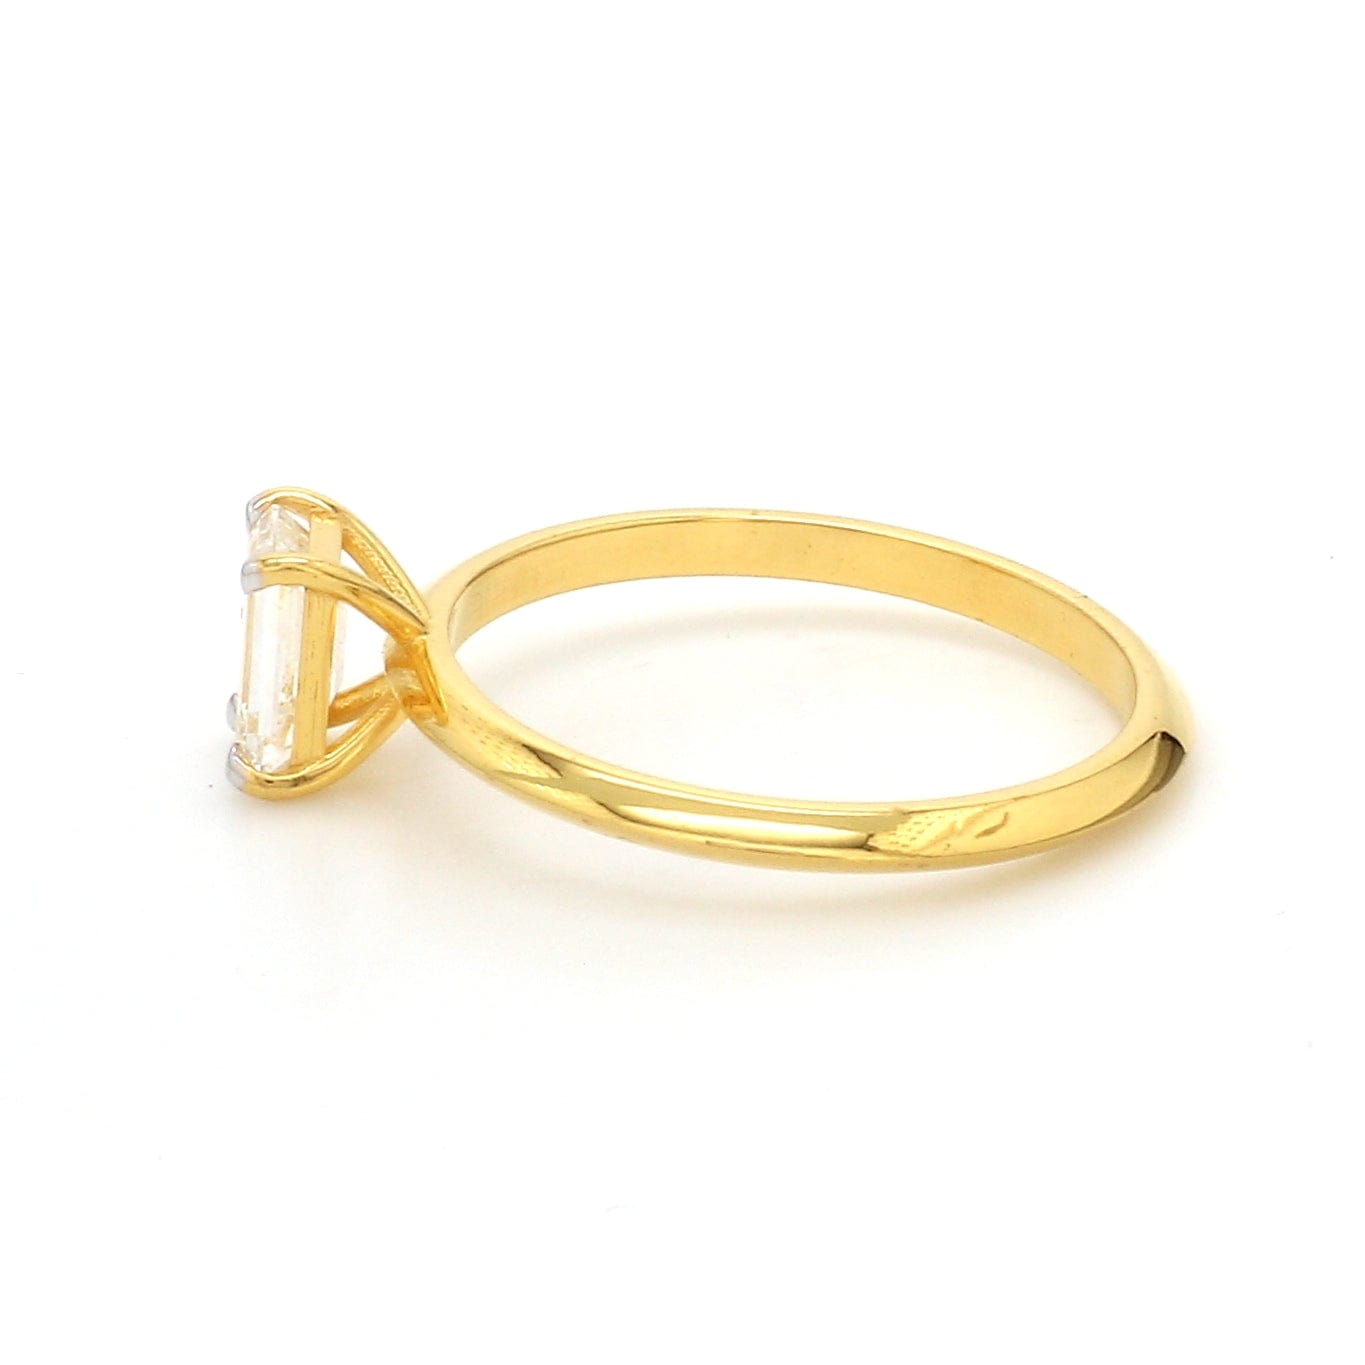 Larissa Band Ring in 18k Gold Vermeil - 8 | Kendra Scott